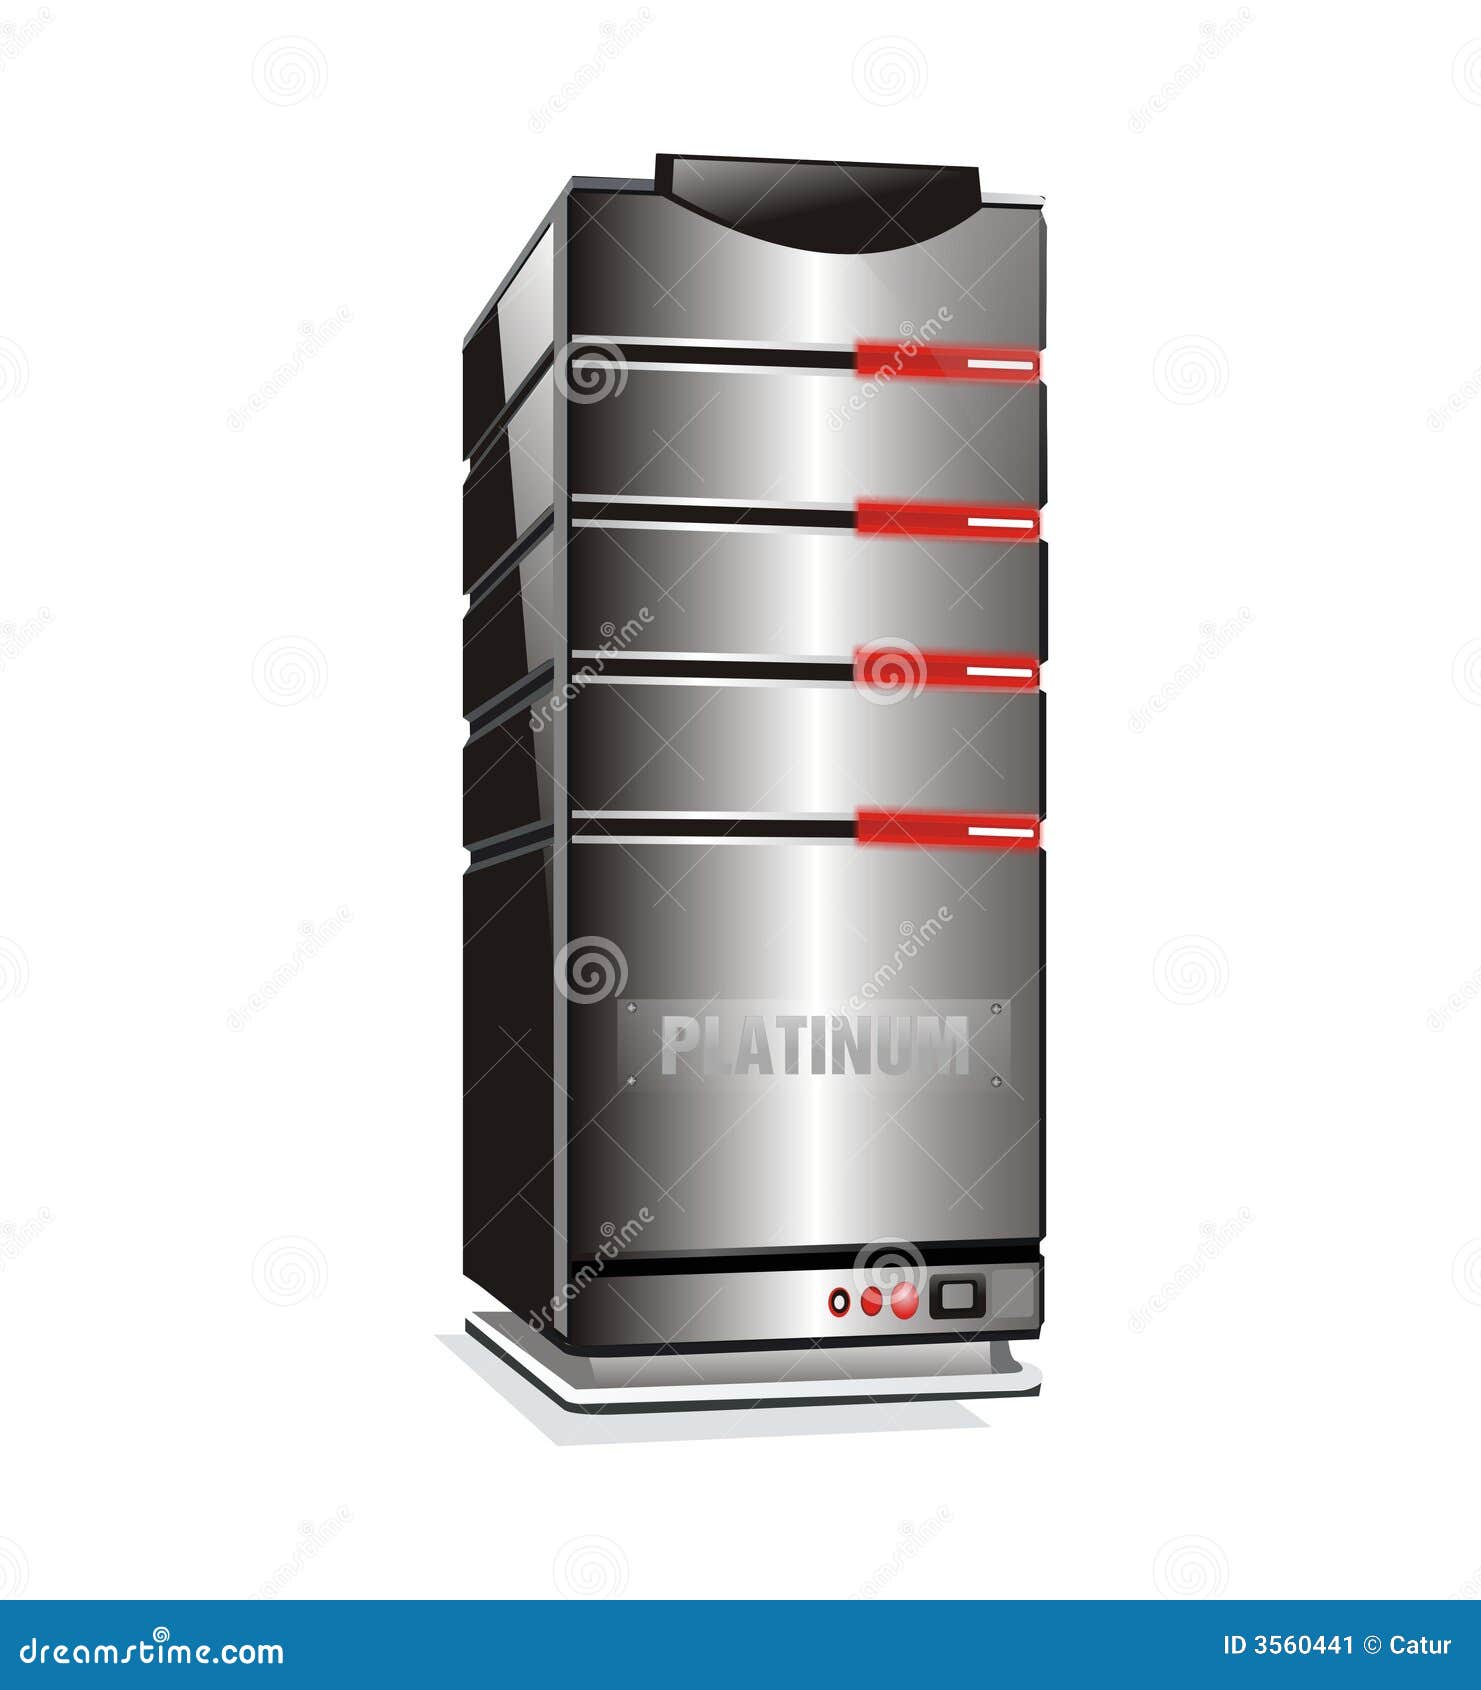 platinum hosting server tower